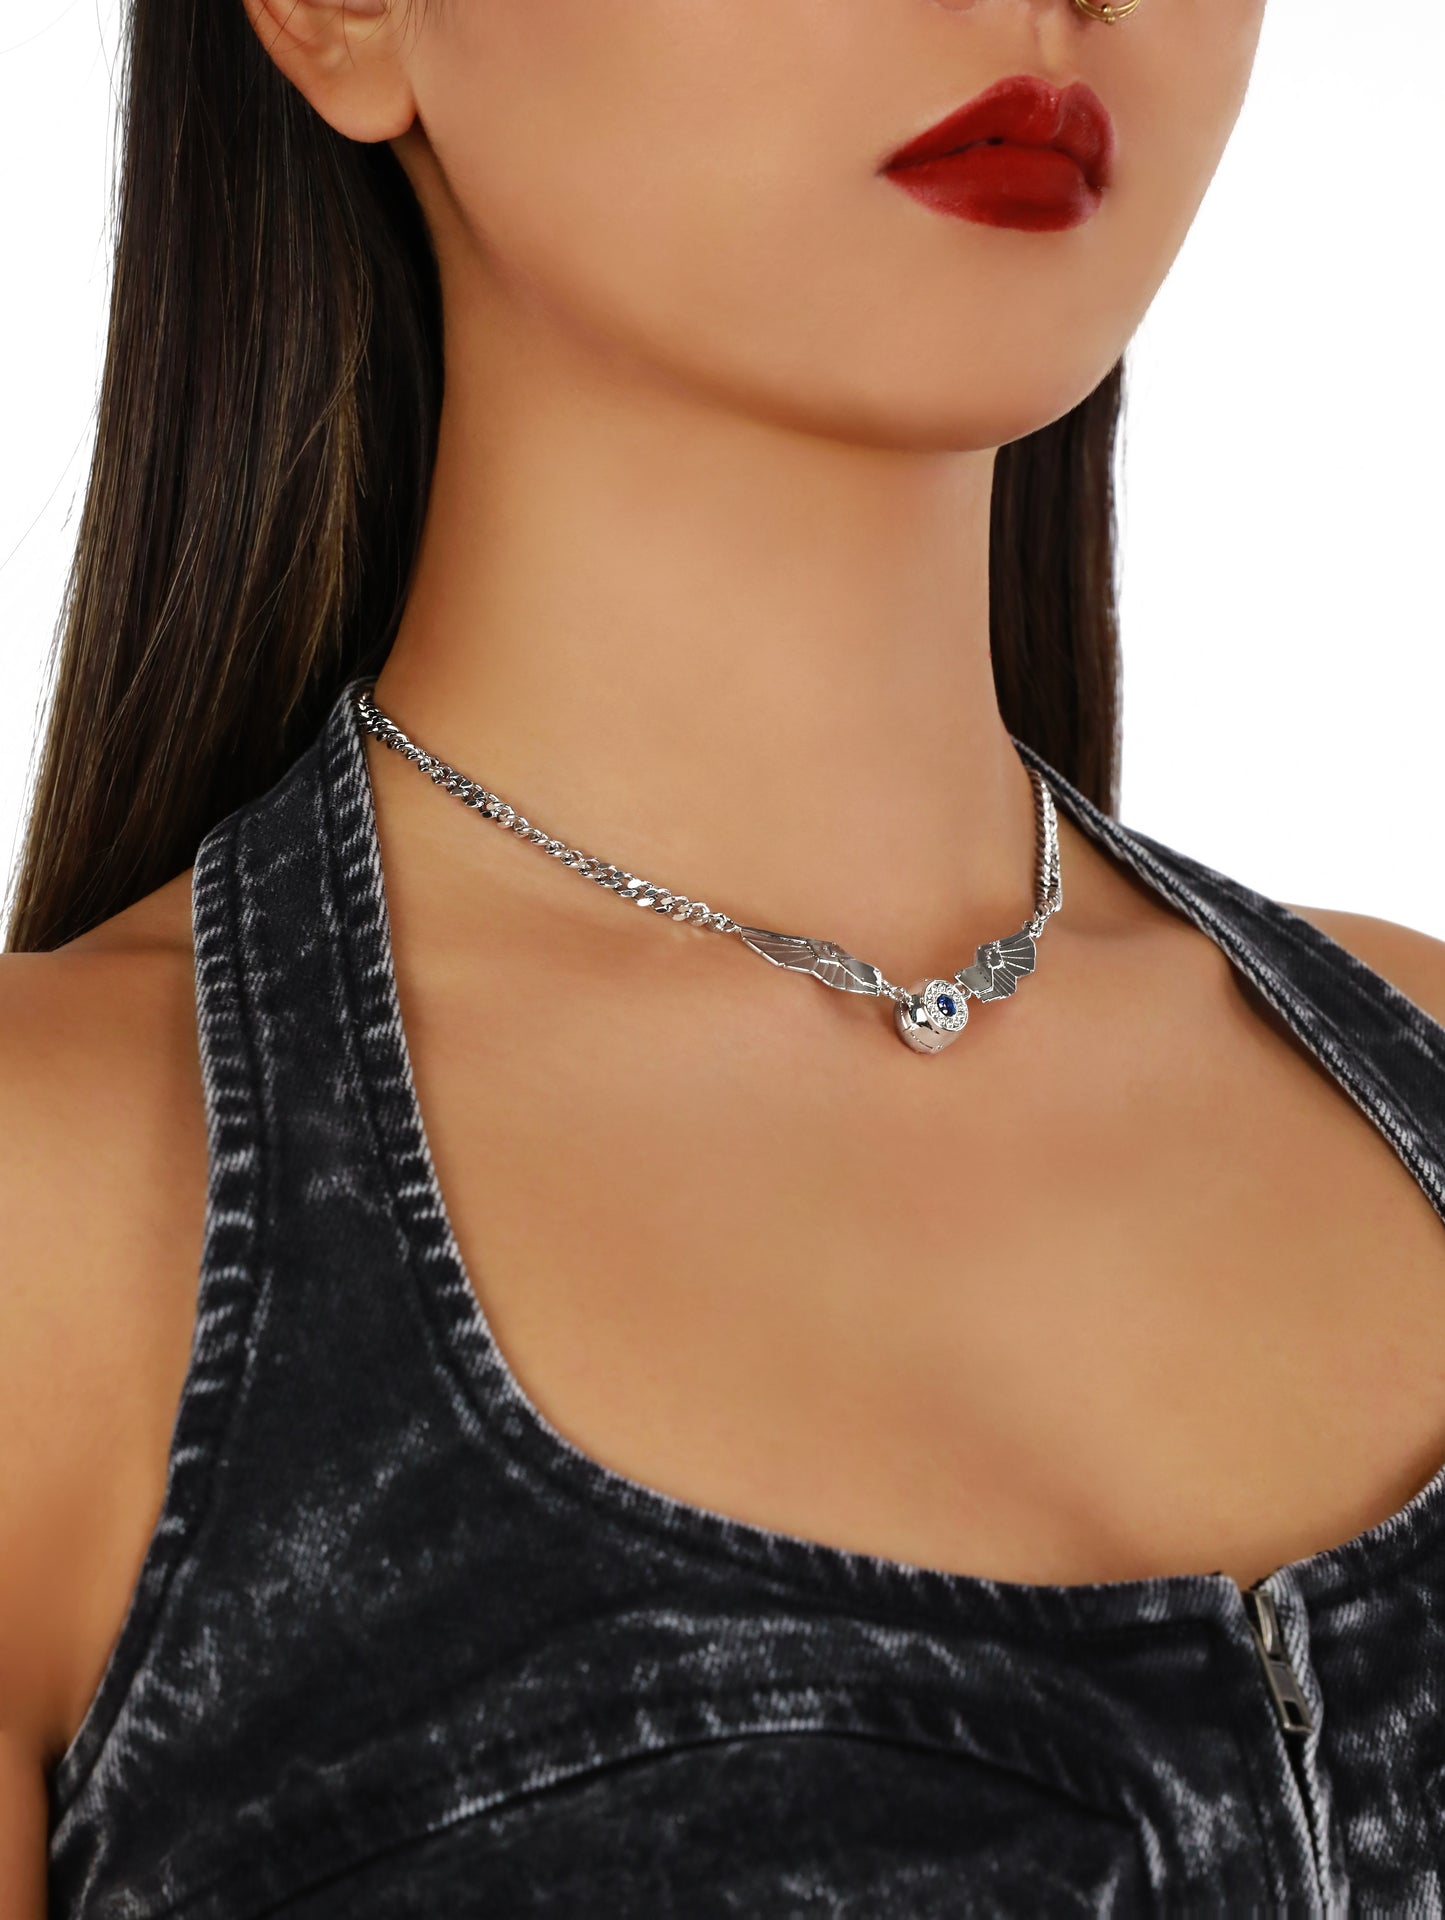 Tomorrow's Girl Series - Angel Eye Choker Necklace (Silver)